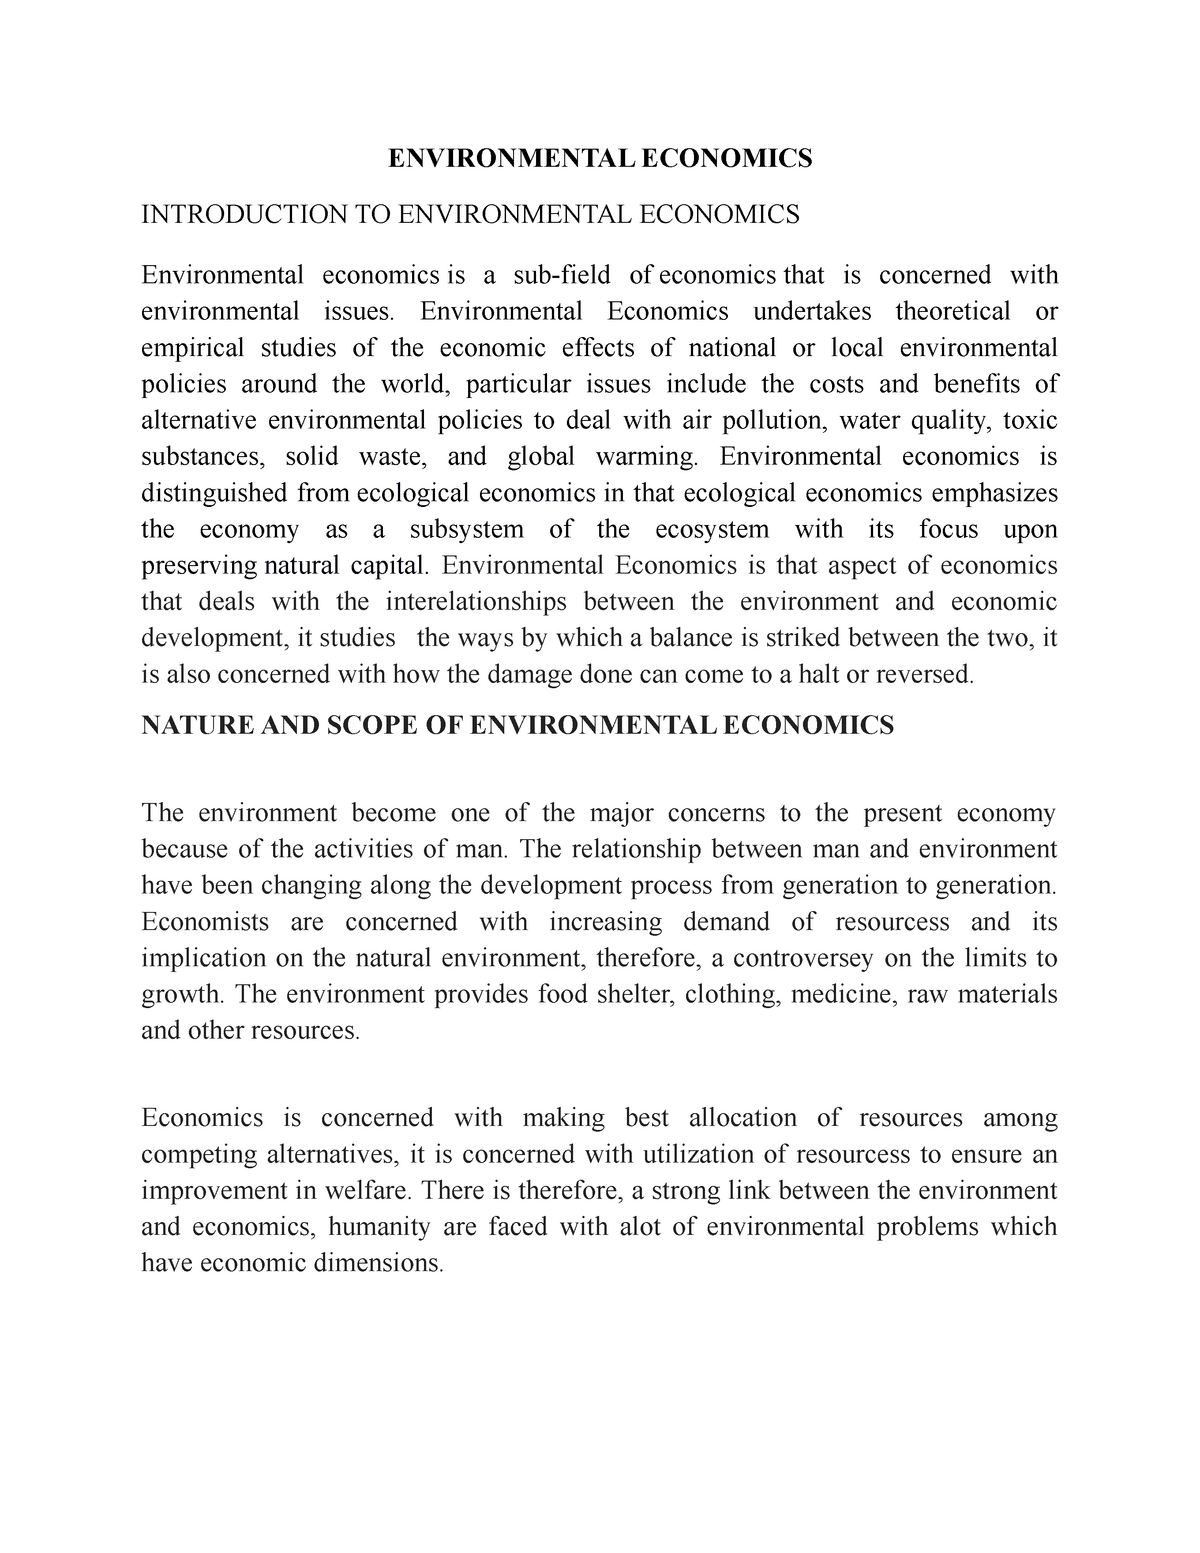 research paper on environmental economics